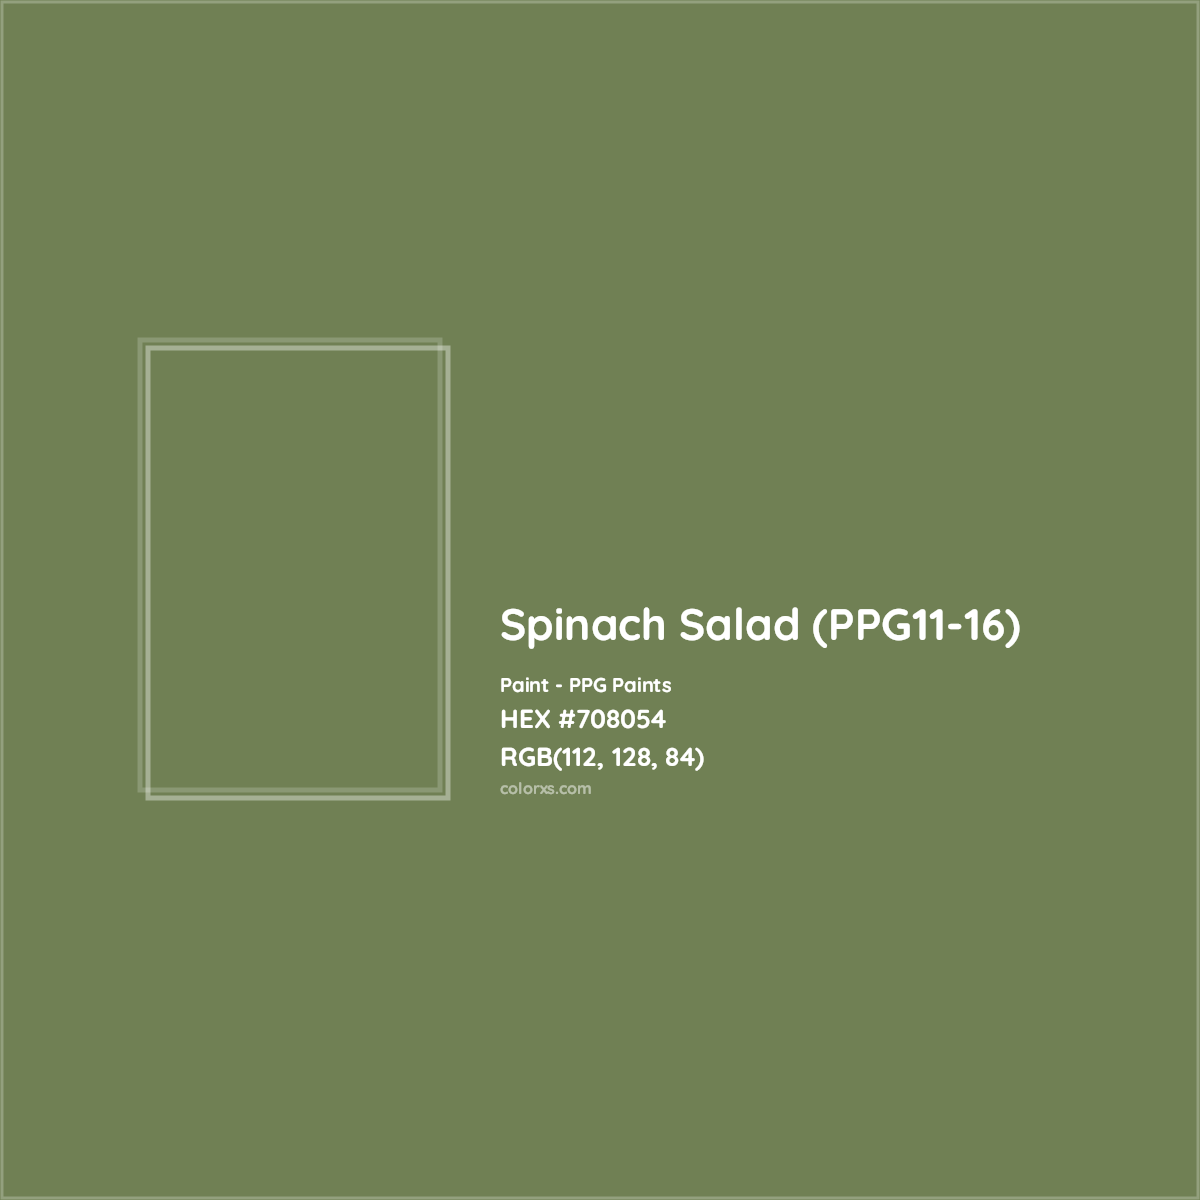 HEX #708054 Spinach Salad (PPG11-16) Paint PPG Paints - Color Code